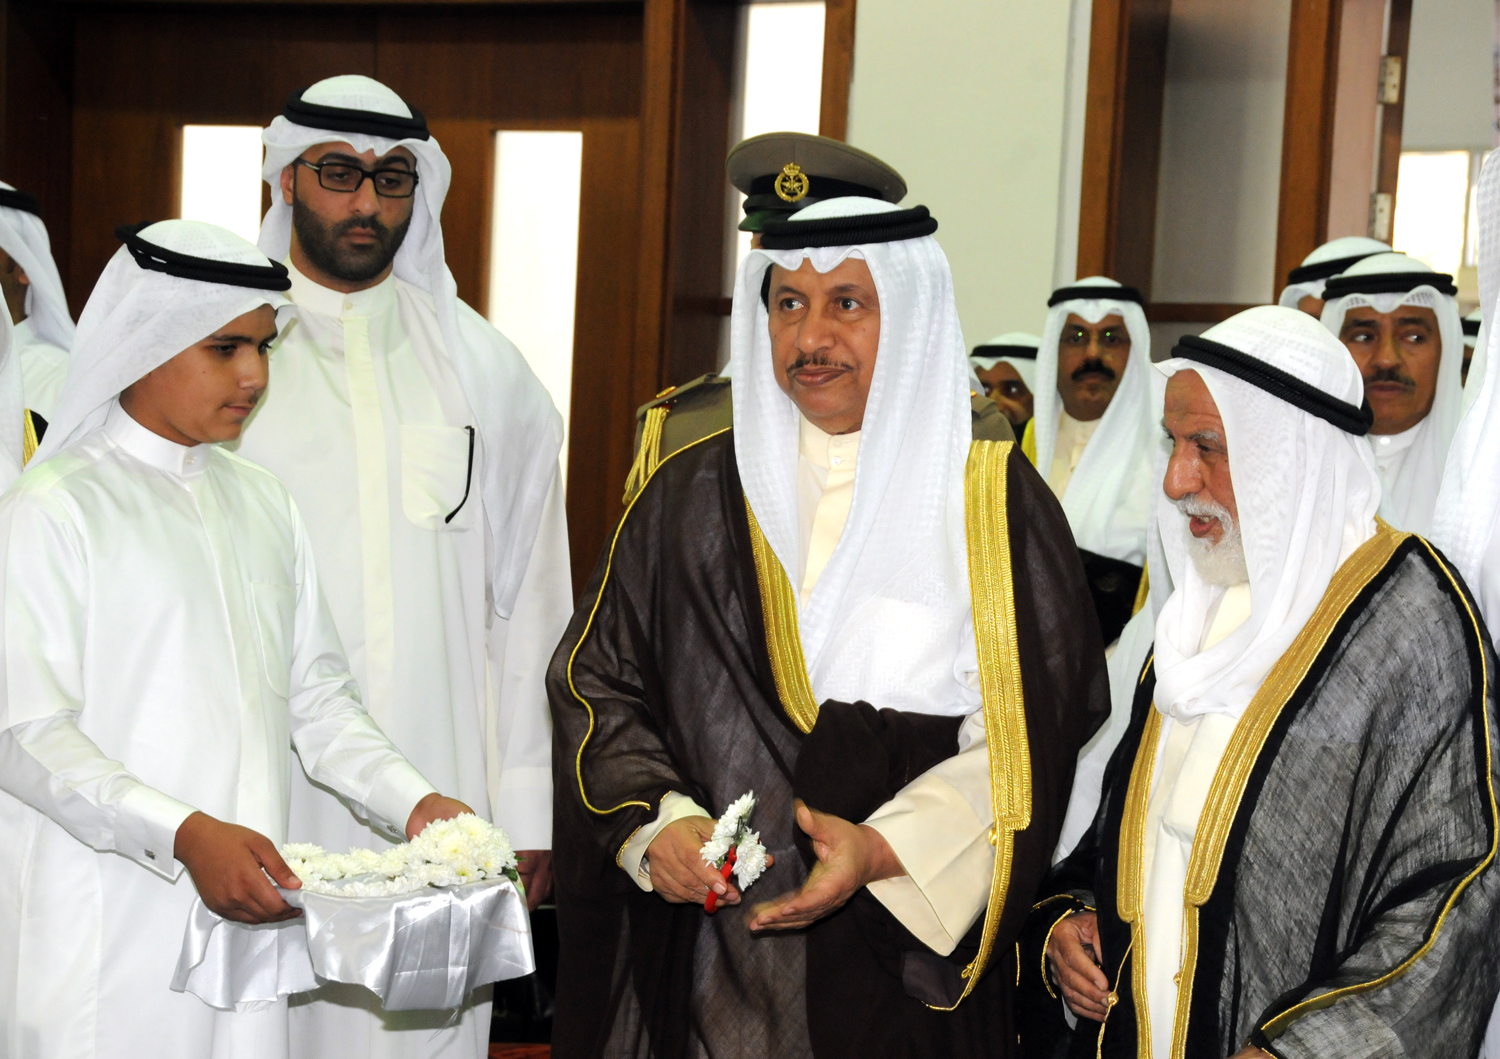 His Highness Prime Minister Sheikh Jaber Al-Mubarak Al-Hamad Al-Sabah opened the 39th Islamic Book Fair